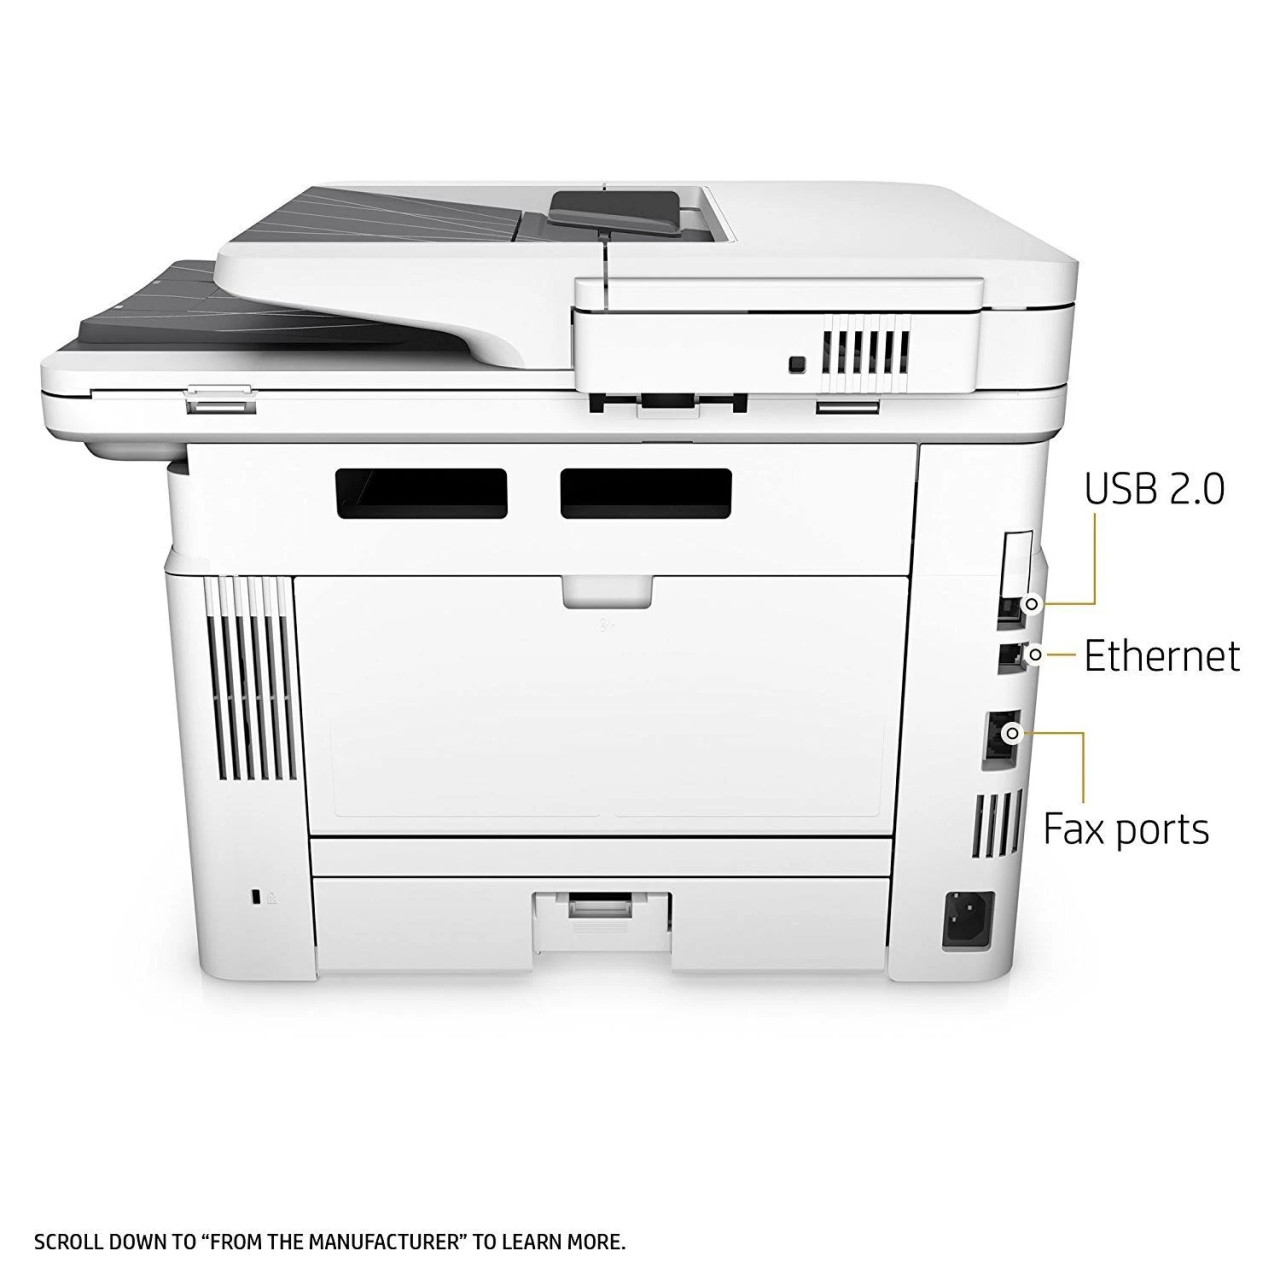 HP LaserJet Pro MFP M426fdn Printer - Refurished Buy Now! Includes Free starter toner